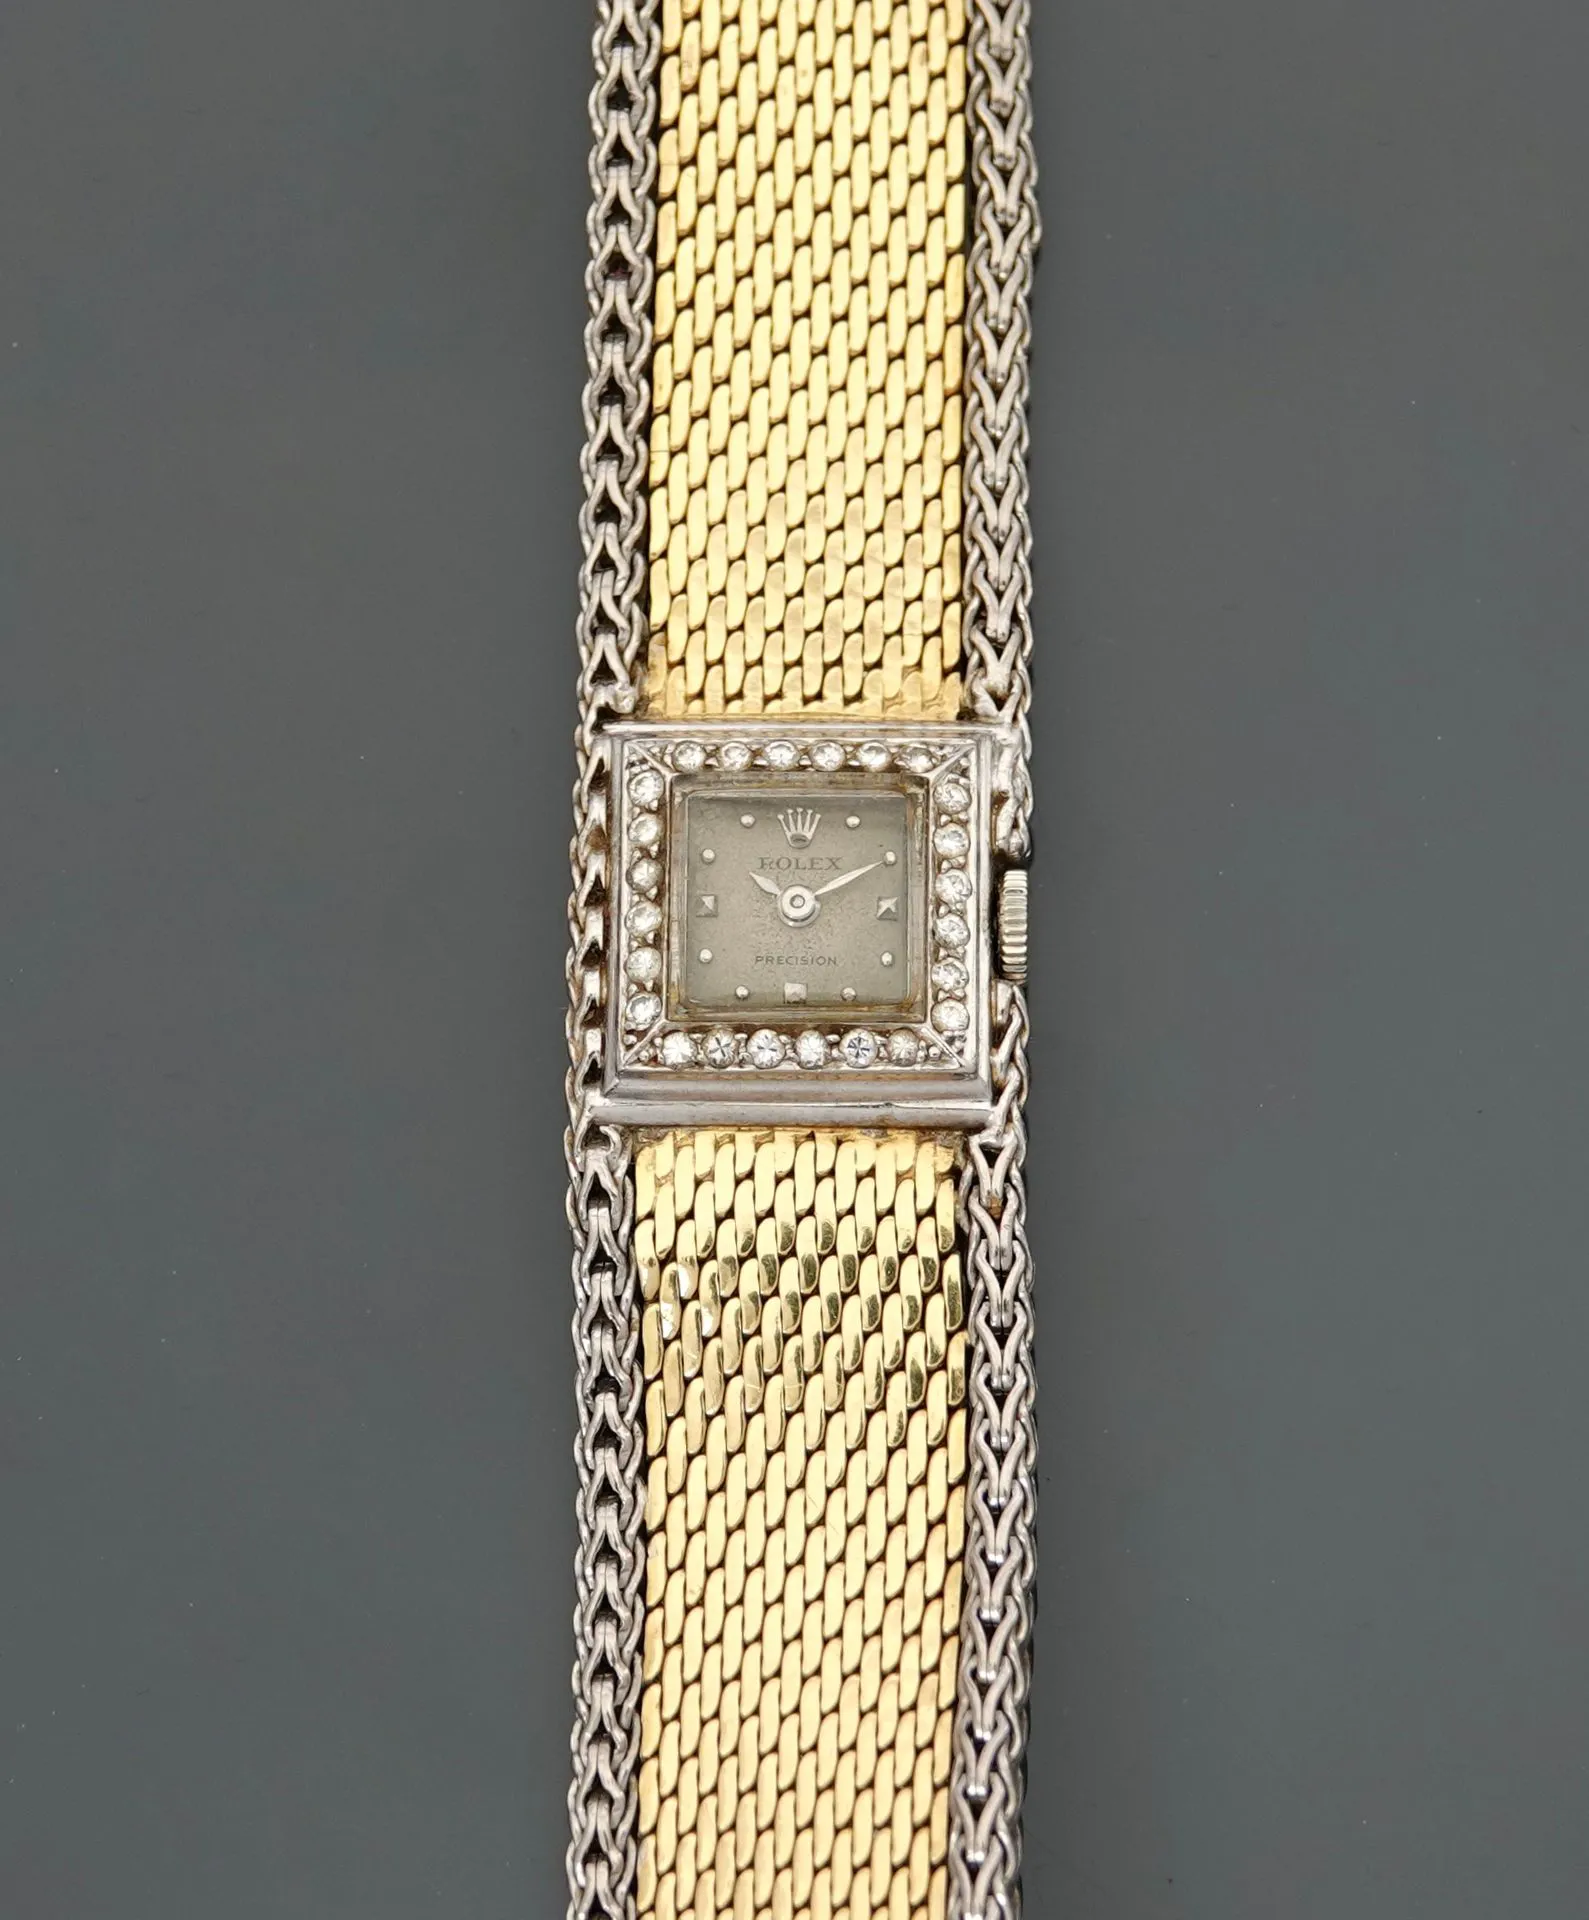 Rolex Precision 9078 19mm Yellow gold, white gold and diamond-set Gray